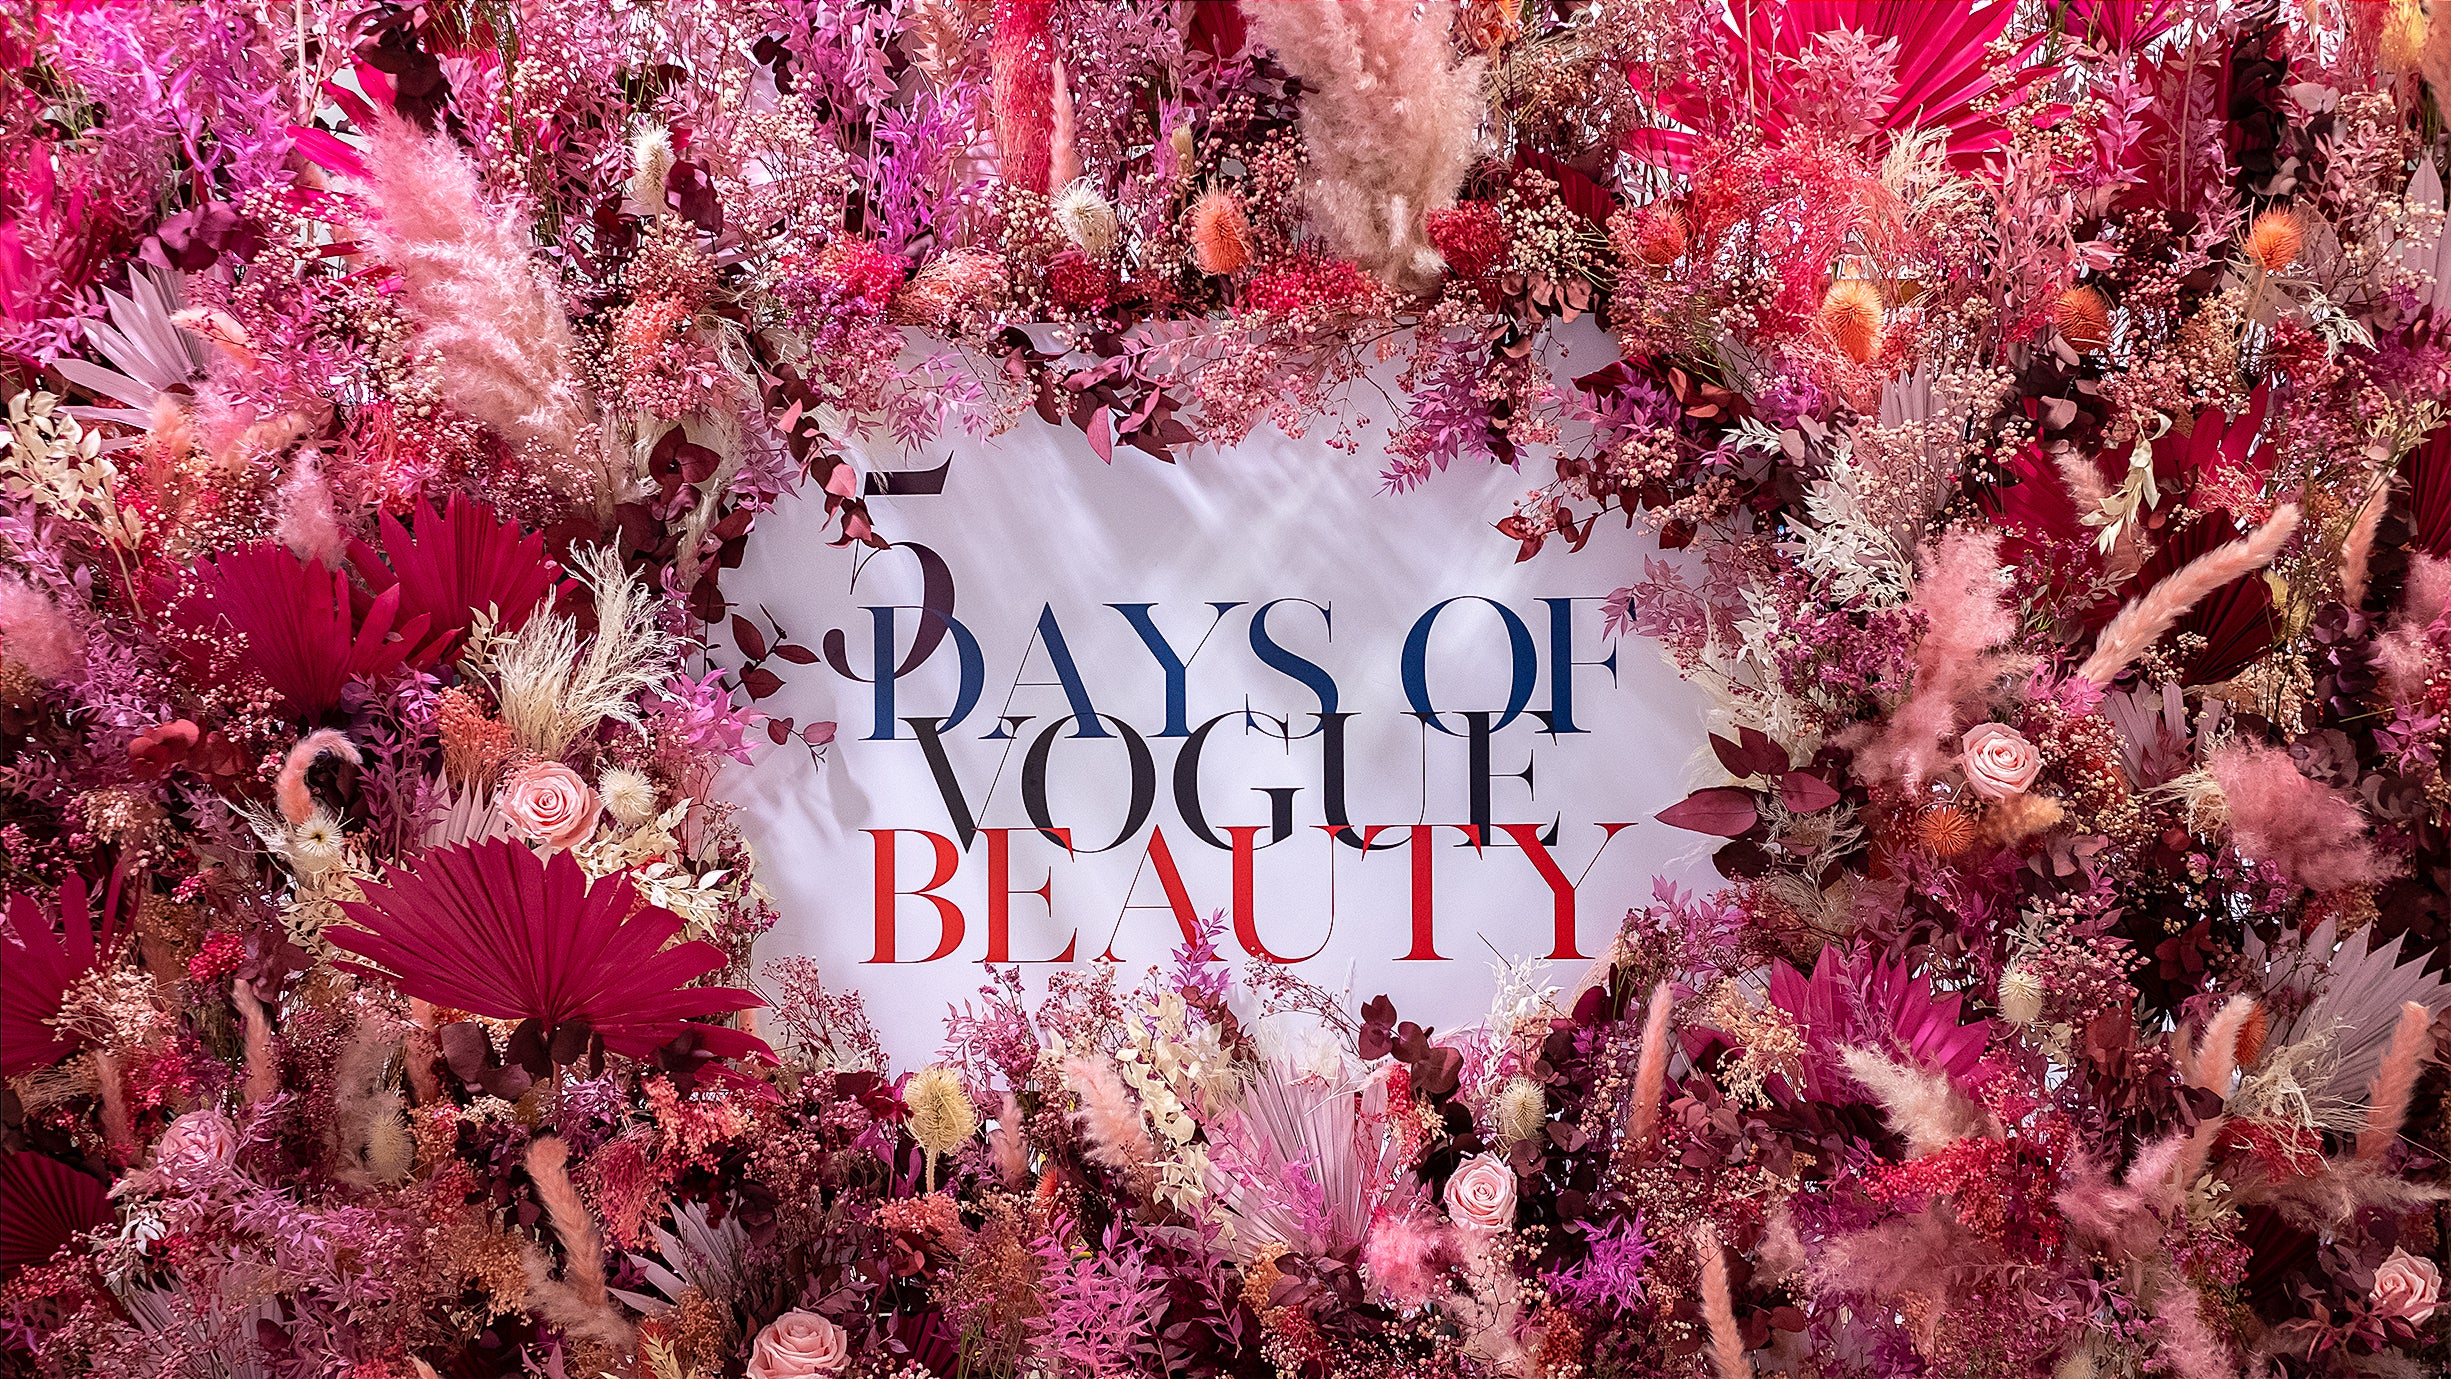 Event Flower Arrangements designed for Vogue's 5 Days of Beauty